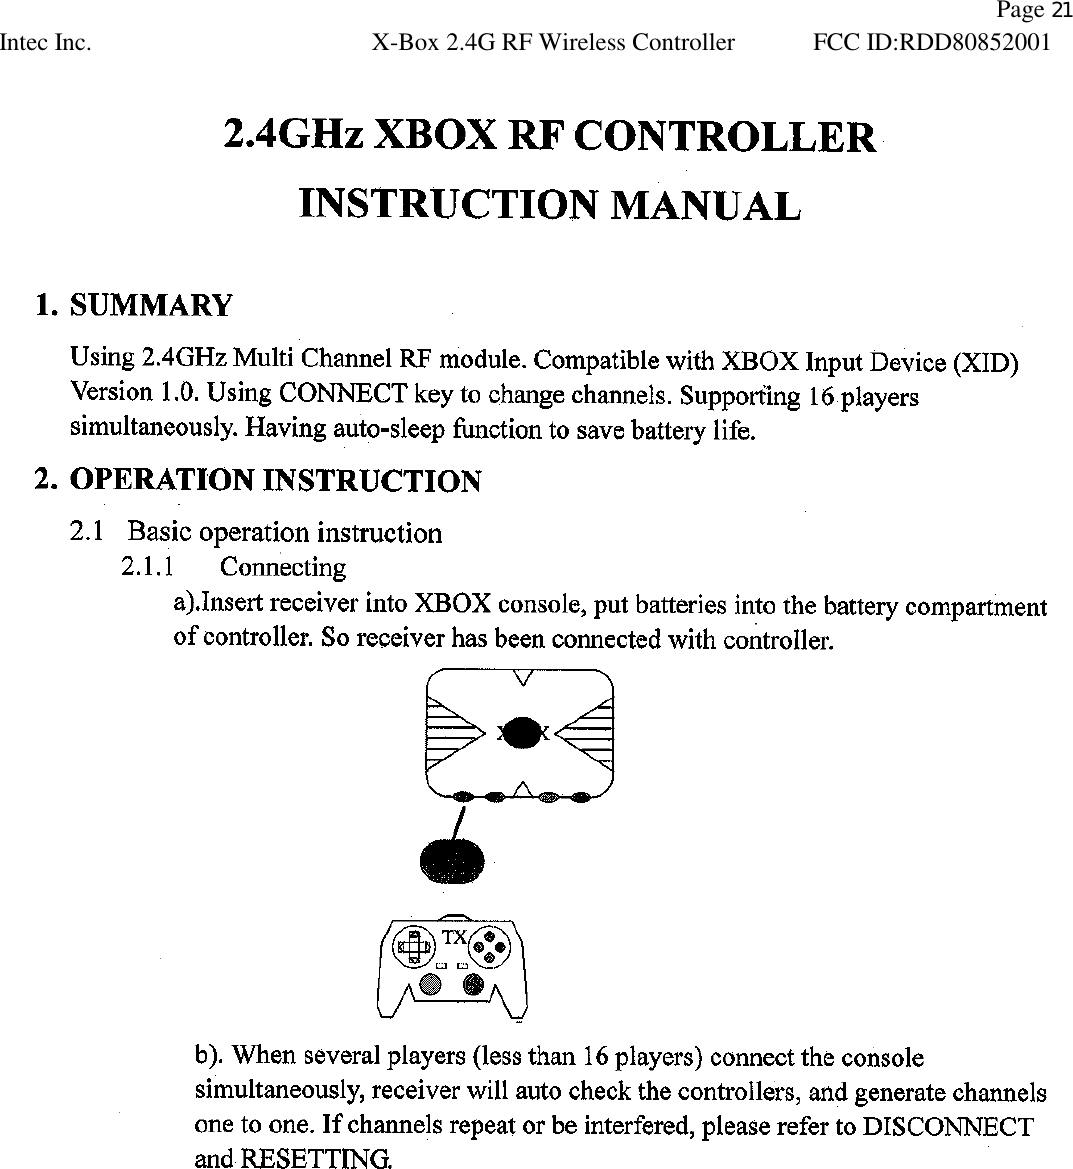                Page 21 Intec Inc. X-Box 2.4G RF Wireless Controller FCC ID:RDD80852001   